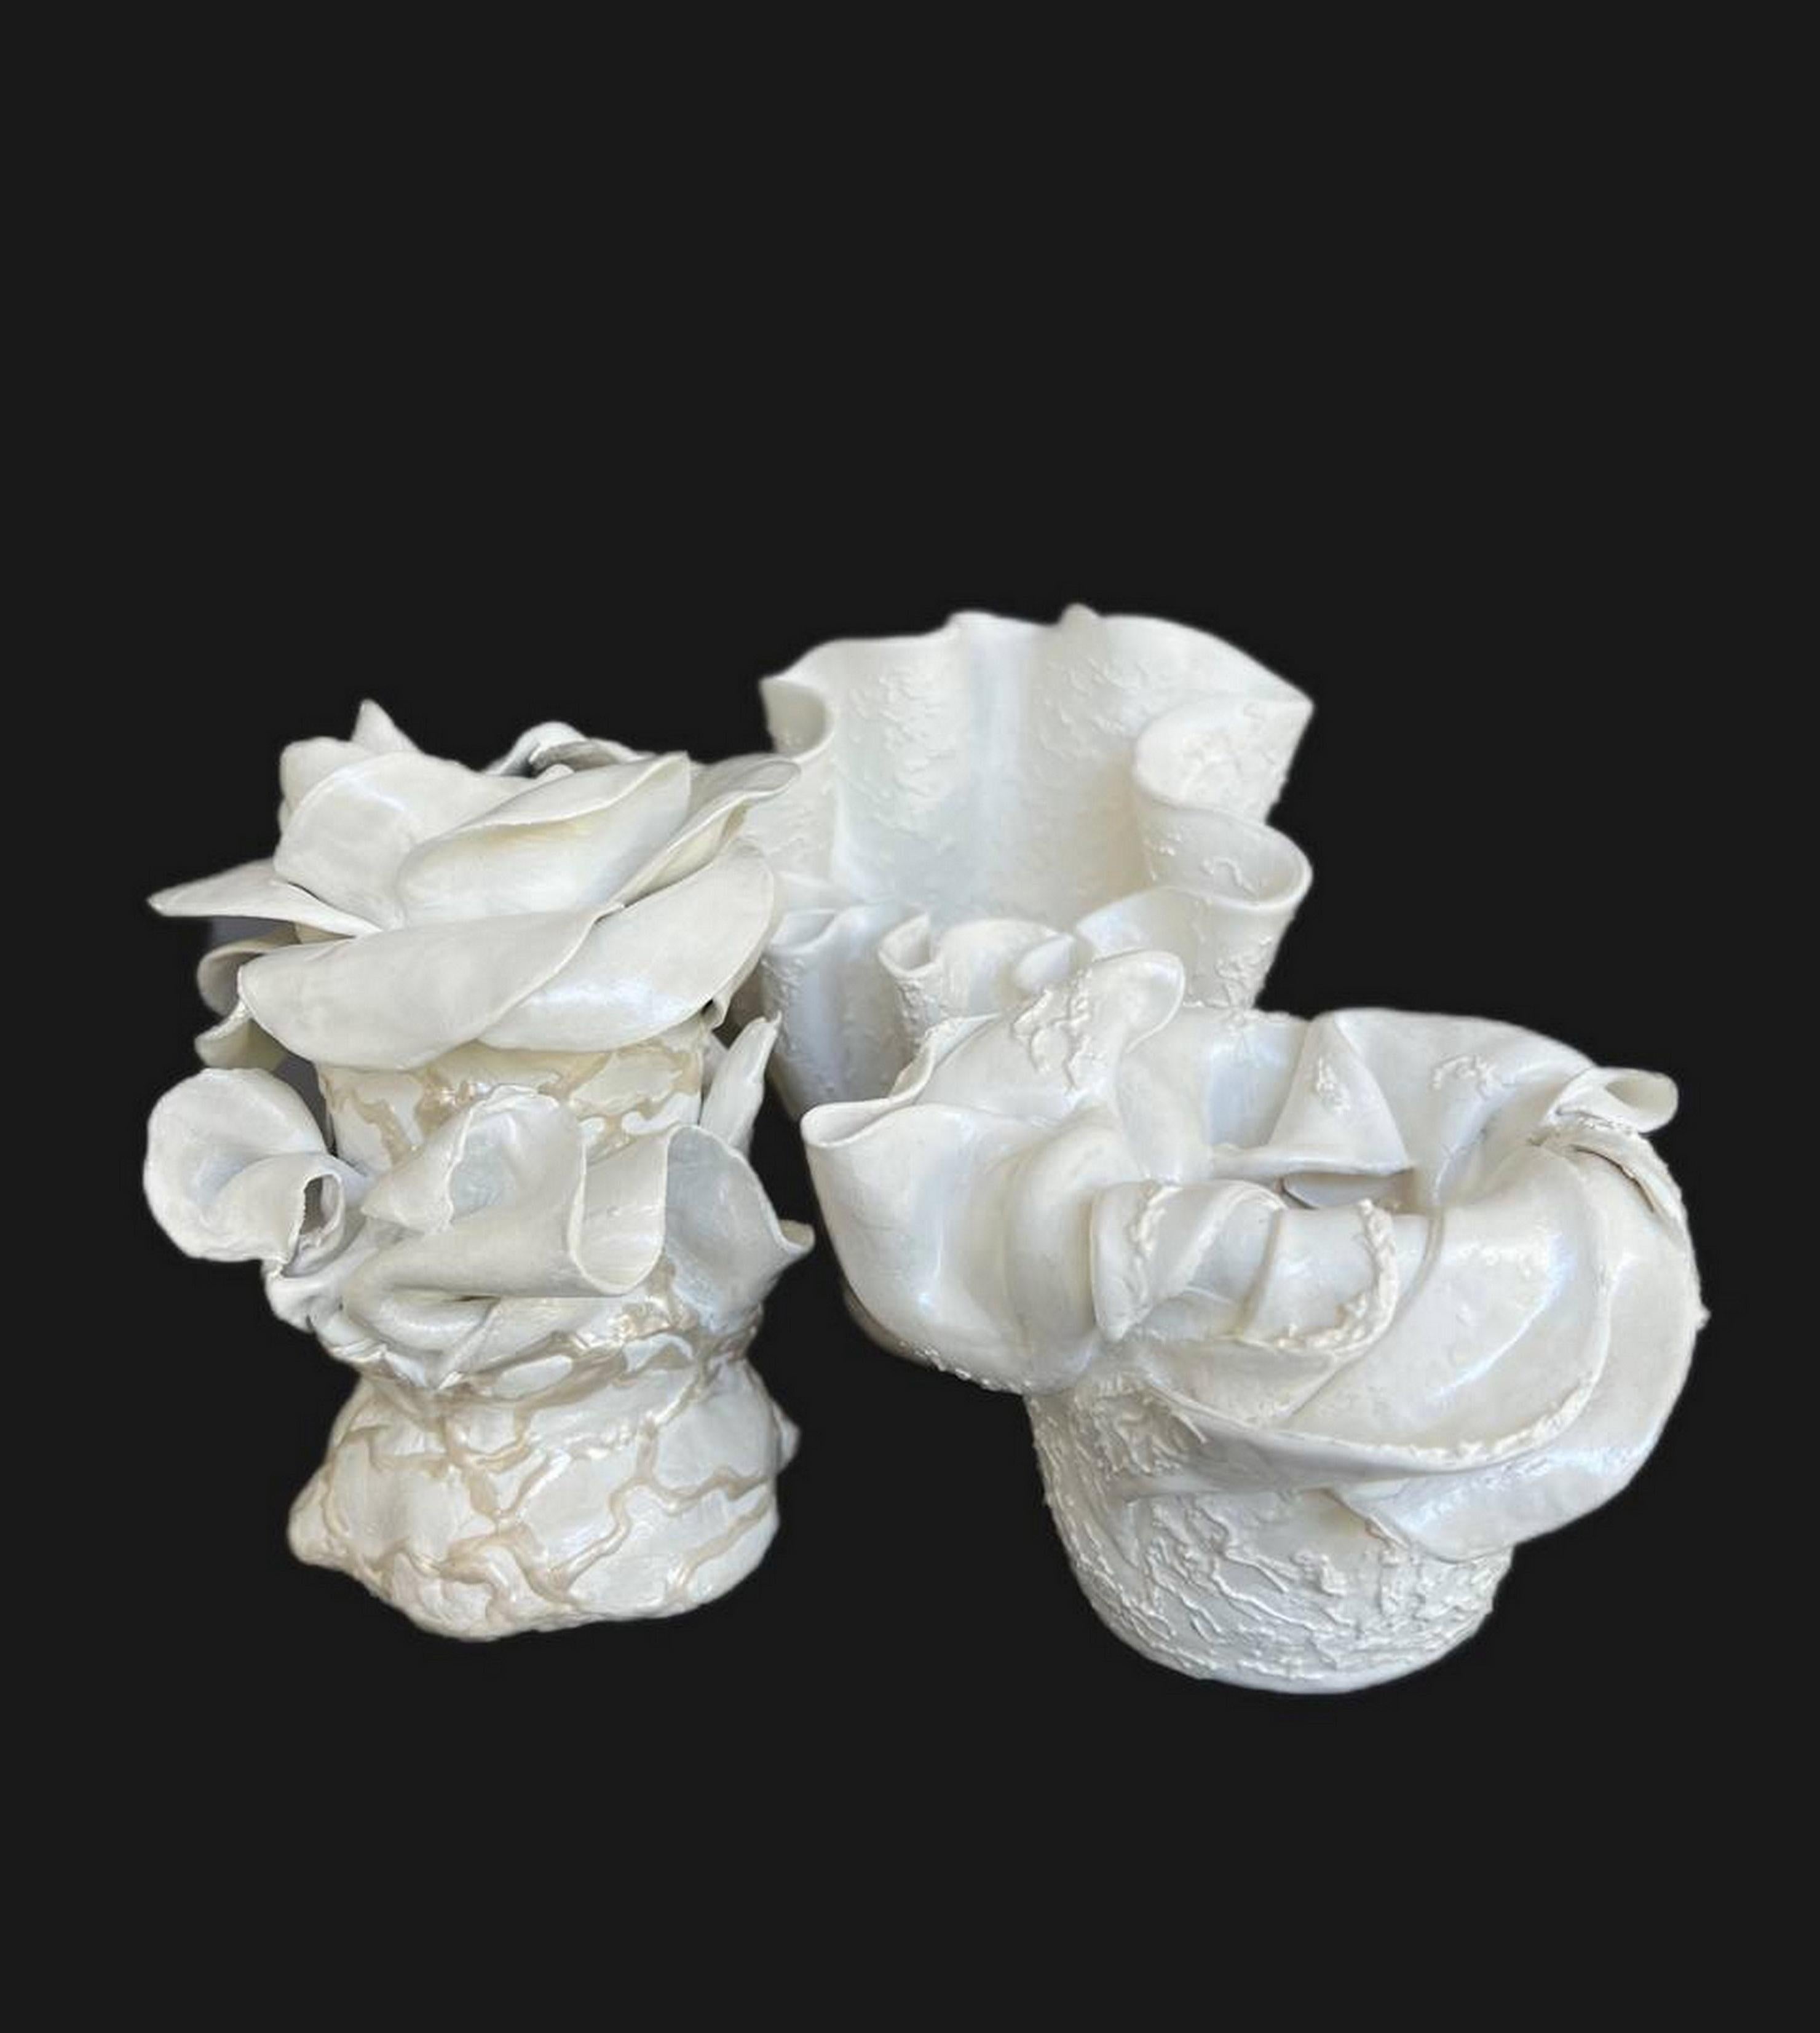  Lot de 3 vases designs "Faith, Hope, Love". Сeramics/ porcelaine, Petite sculpture